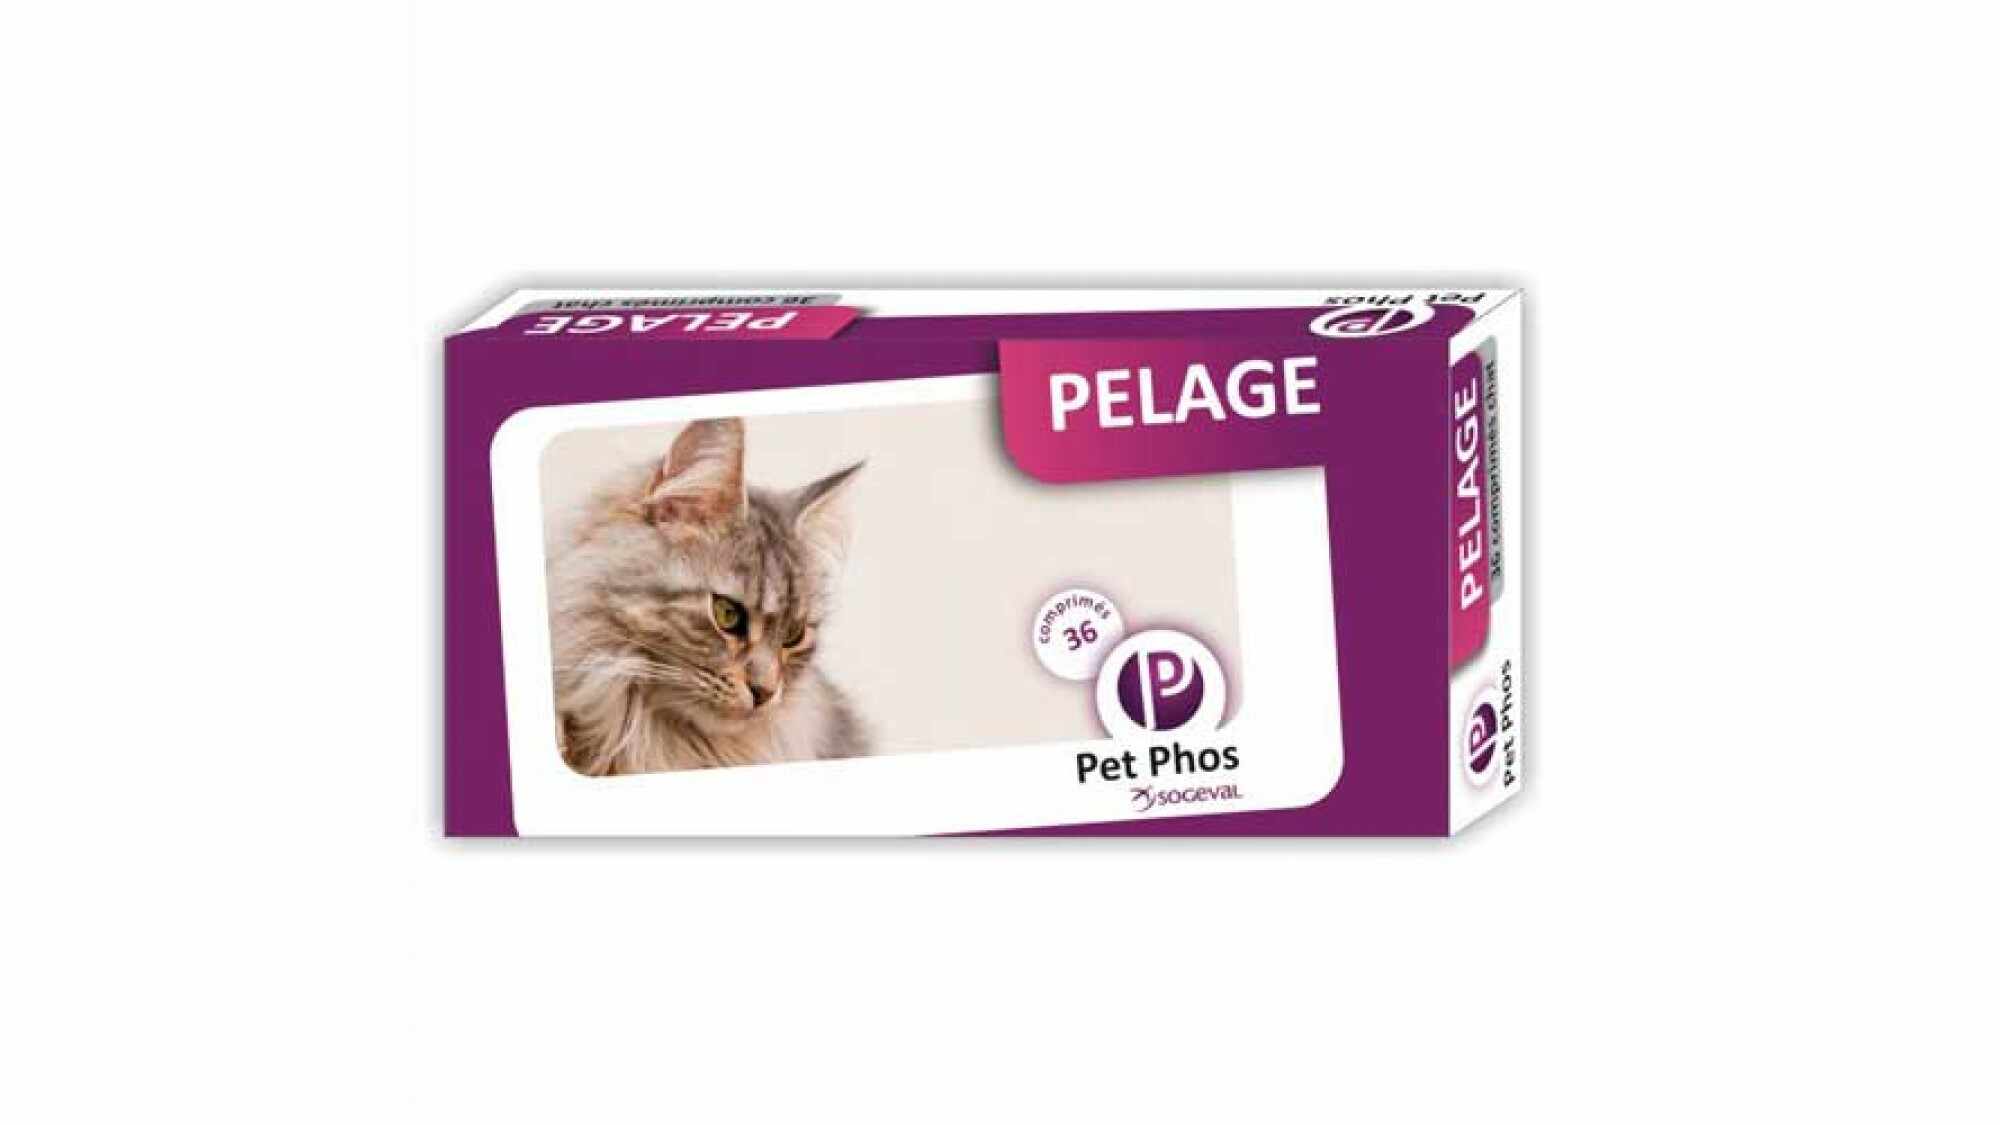 Pet Phos Felin Special Pelage Piele si Blana, 36 Tablete